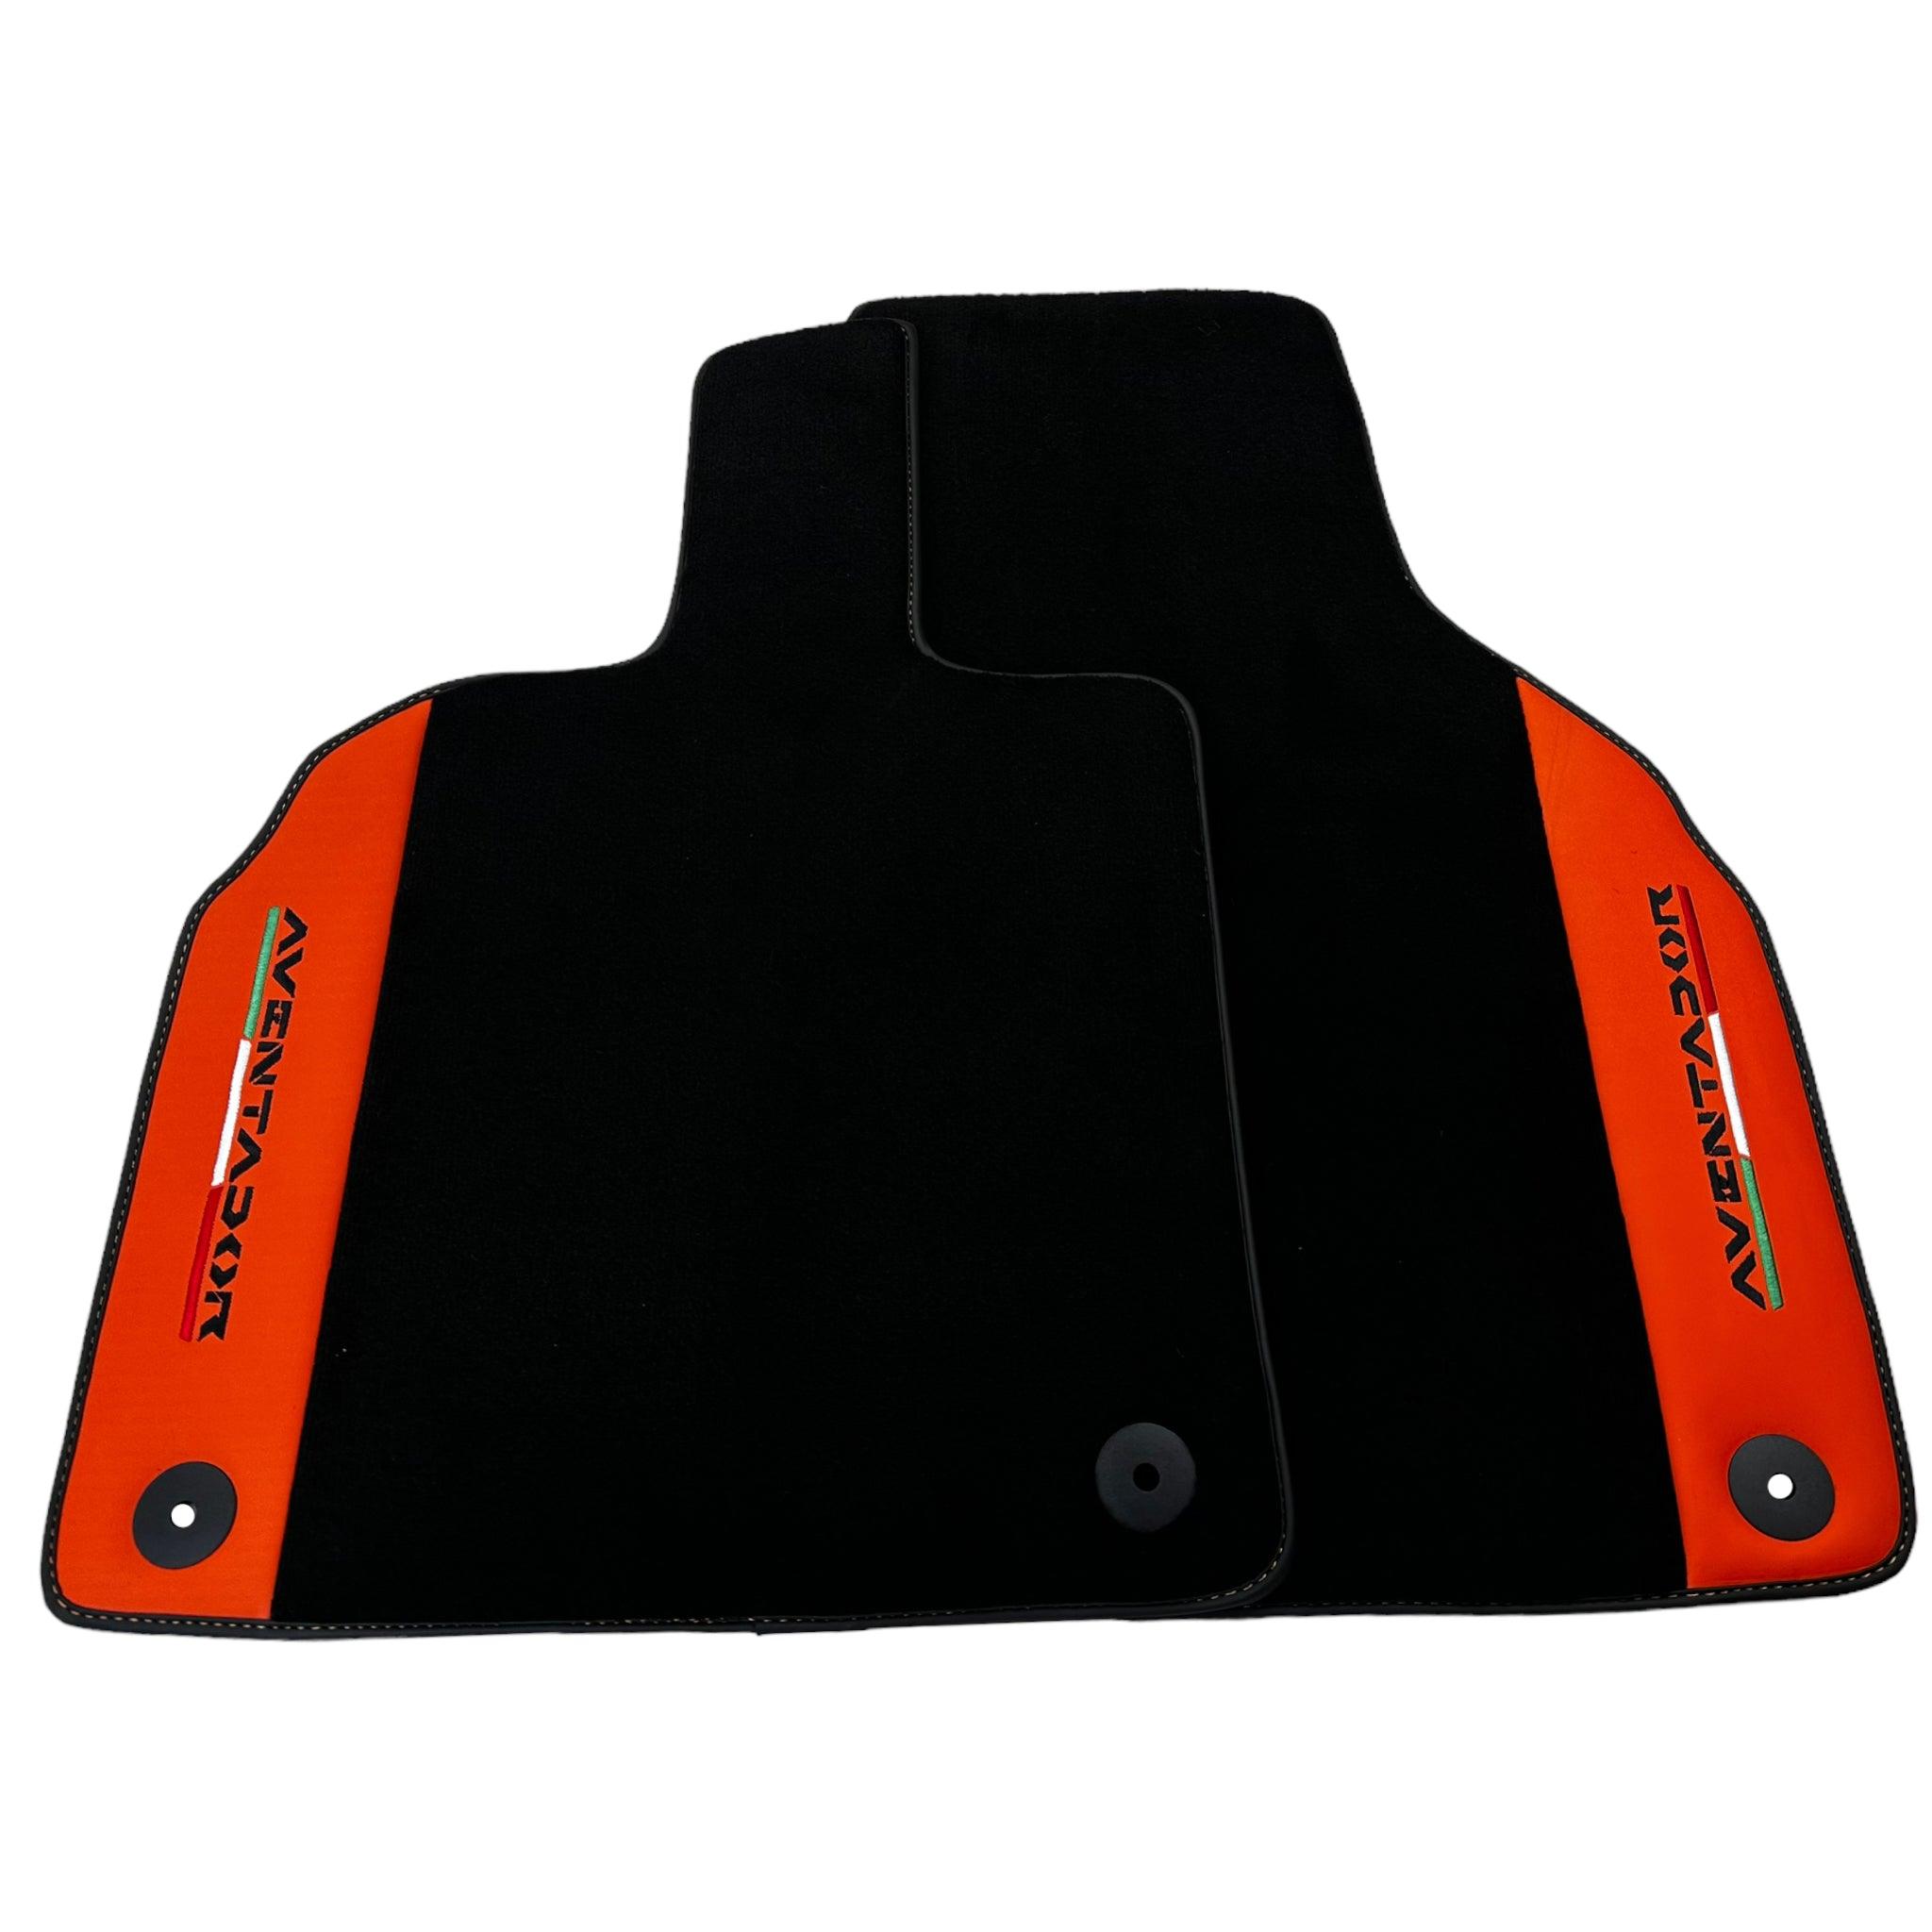 Black Floor Mats for Lamborghini Aventador with Orange (Arancia Mira) Nappa Leather